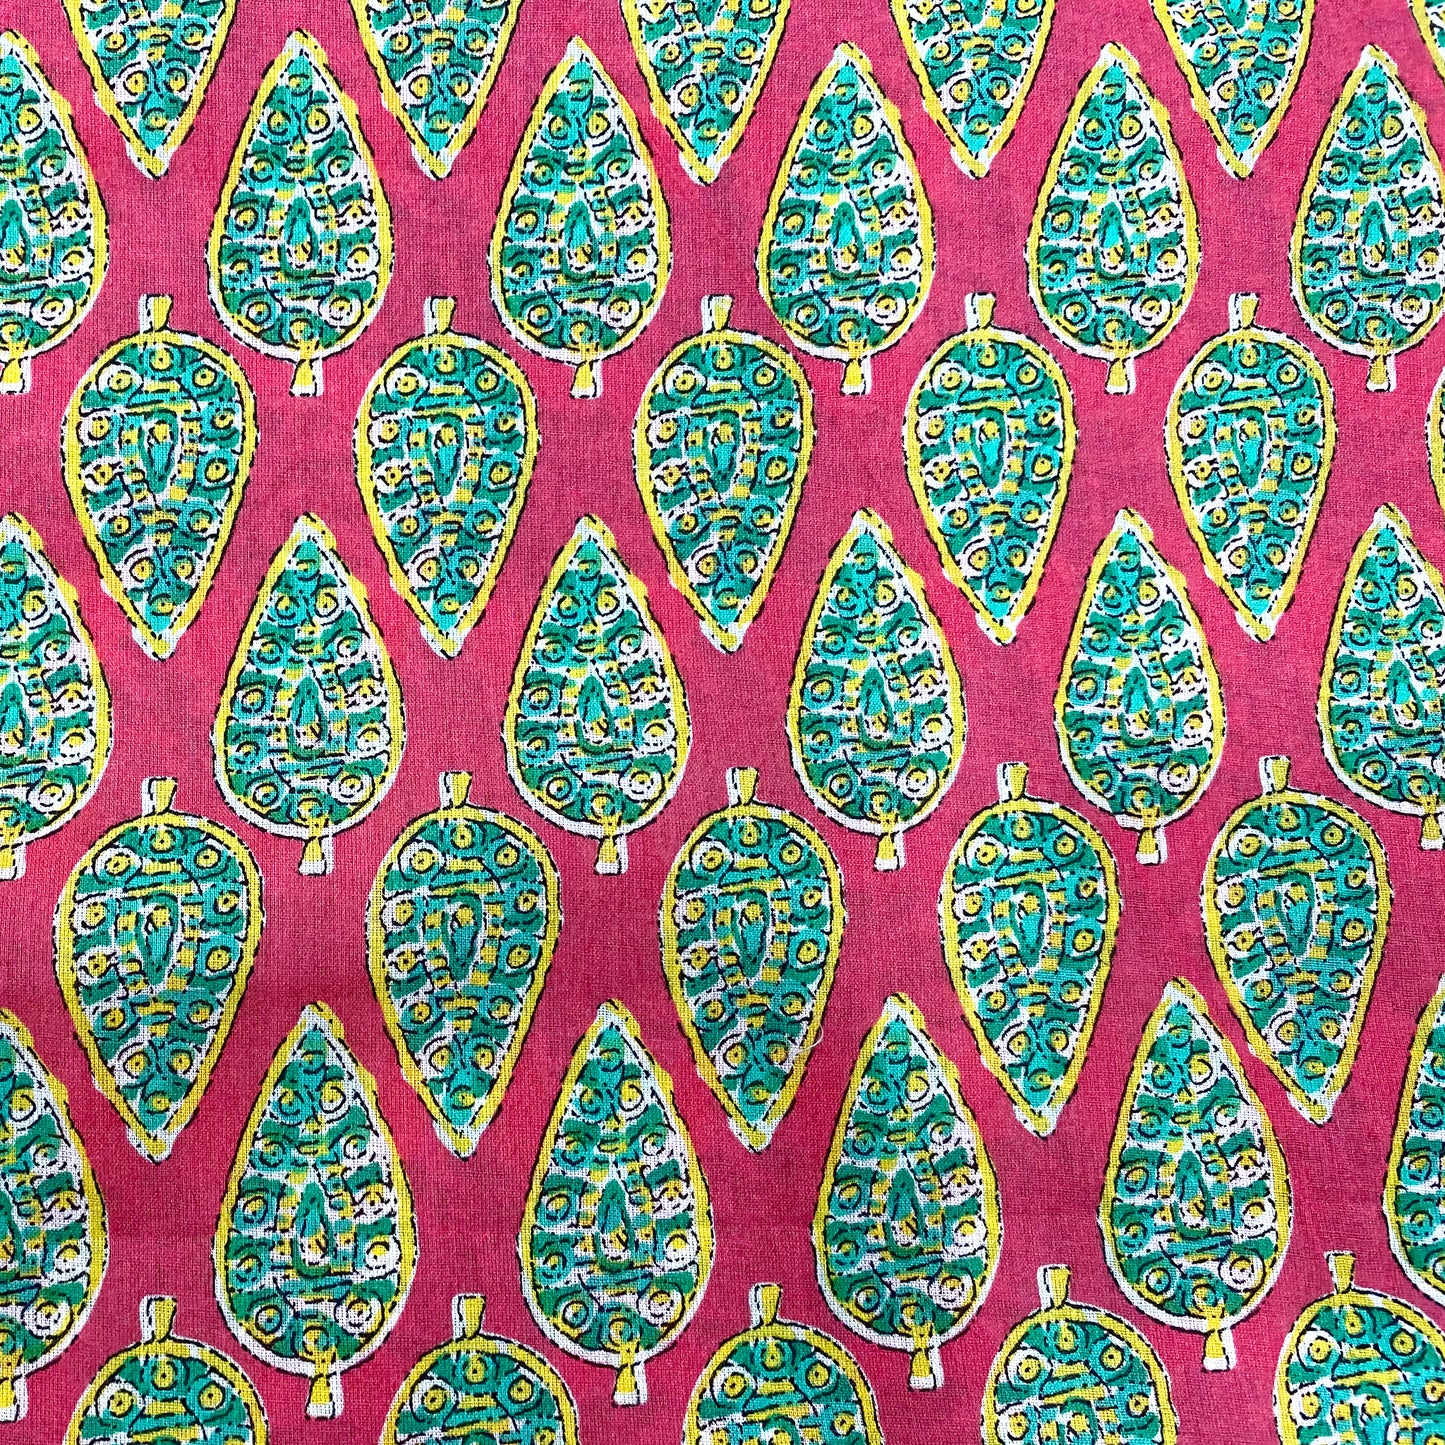 Pine Cone Printed Cotton Fabric